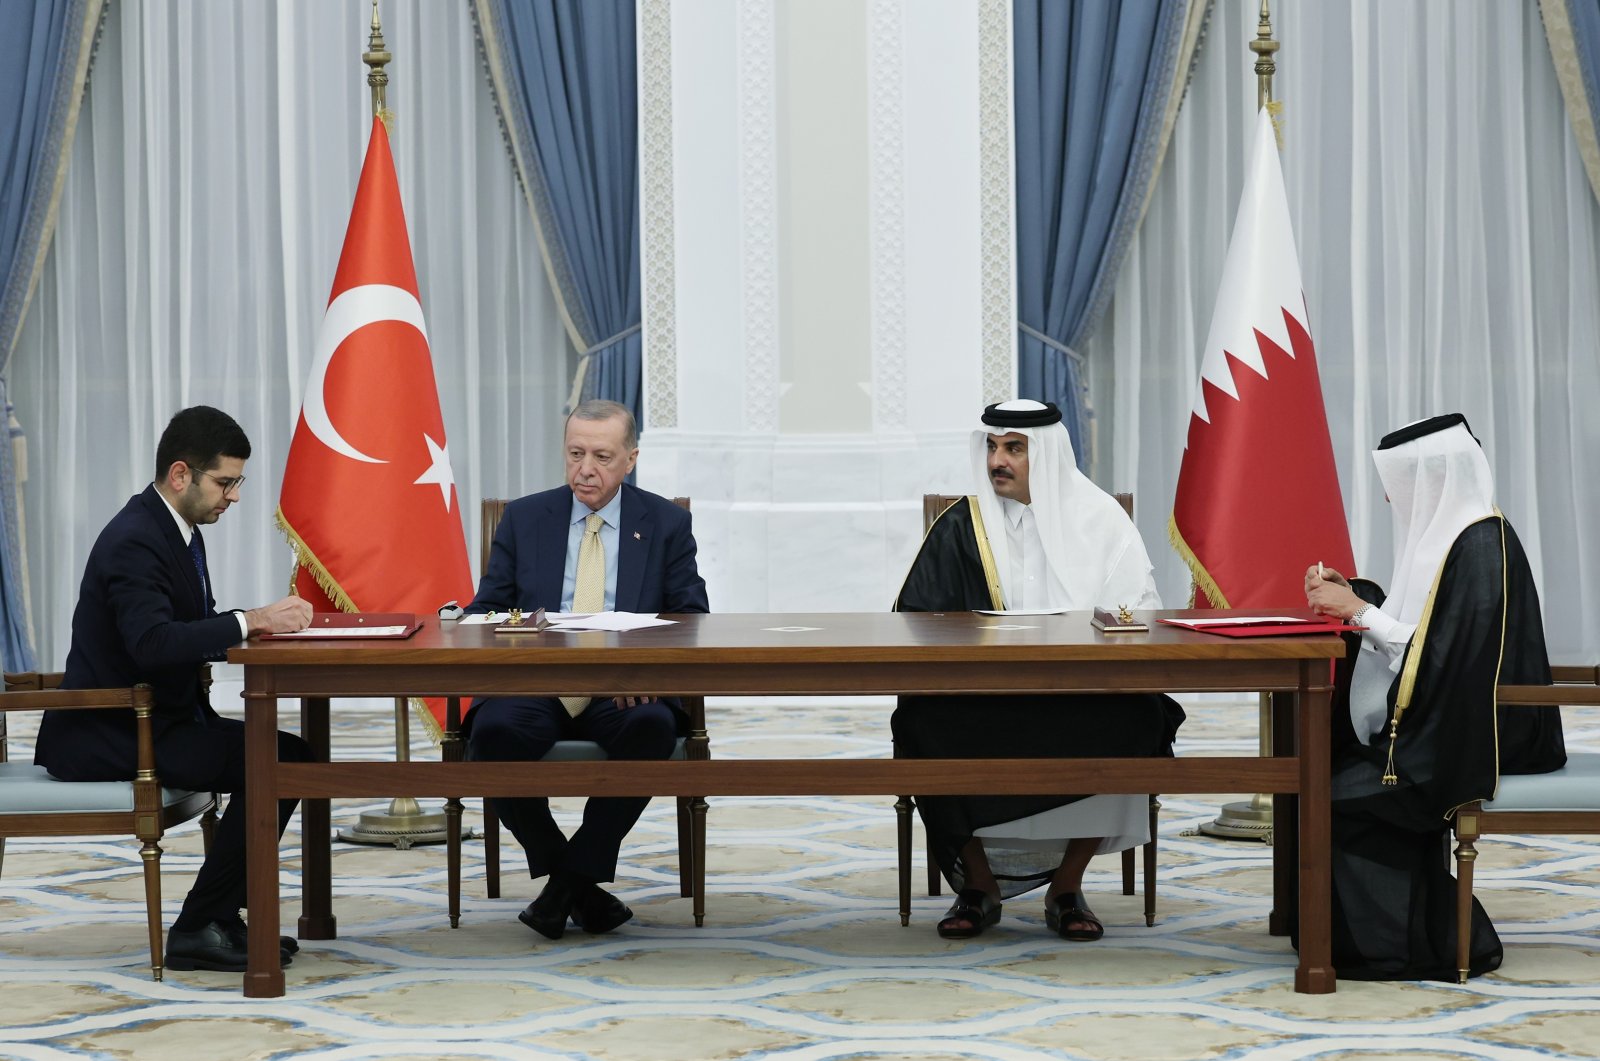 Türkiye, Qatar set $5 billion bilateral trade target